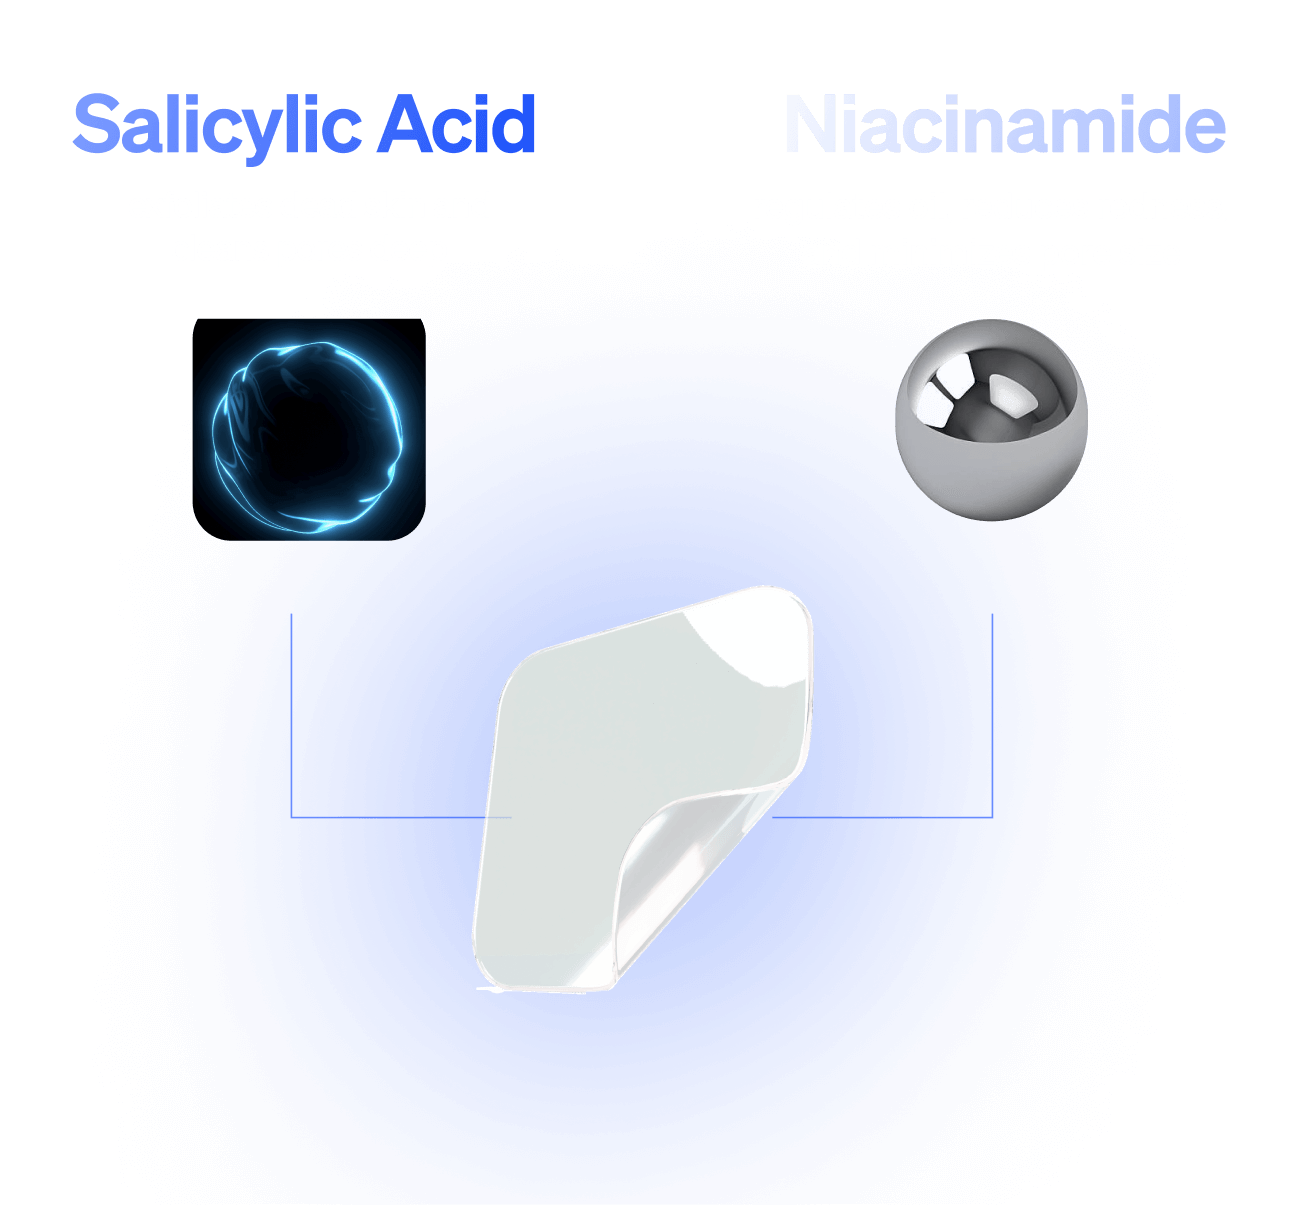 salicylic acid and niacinamide at work